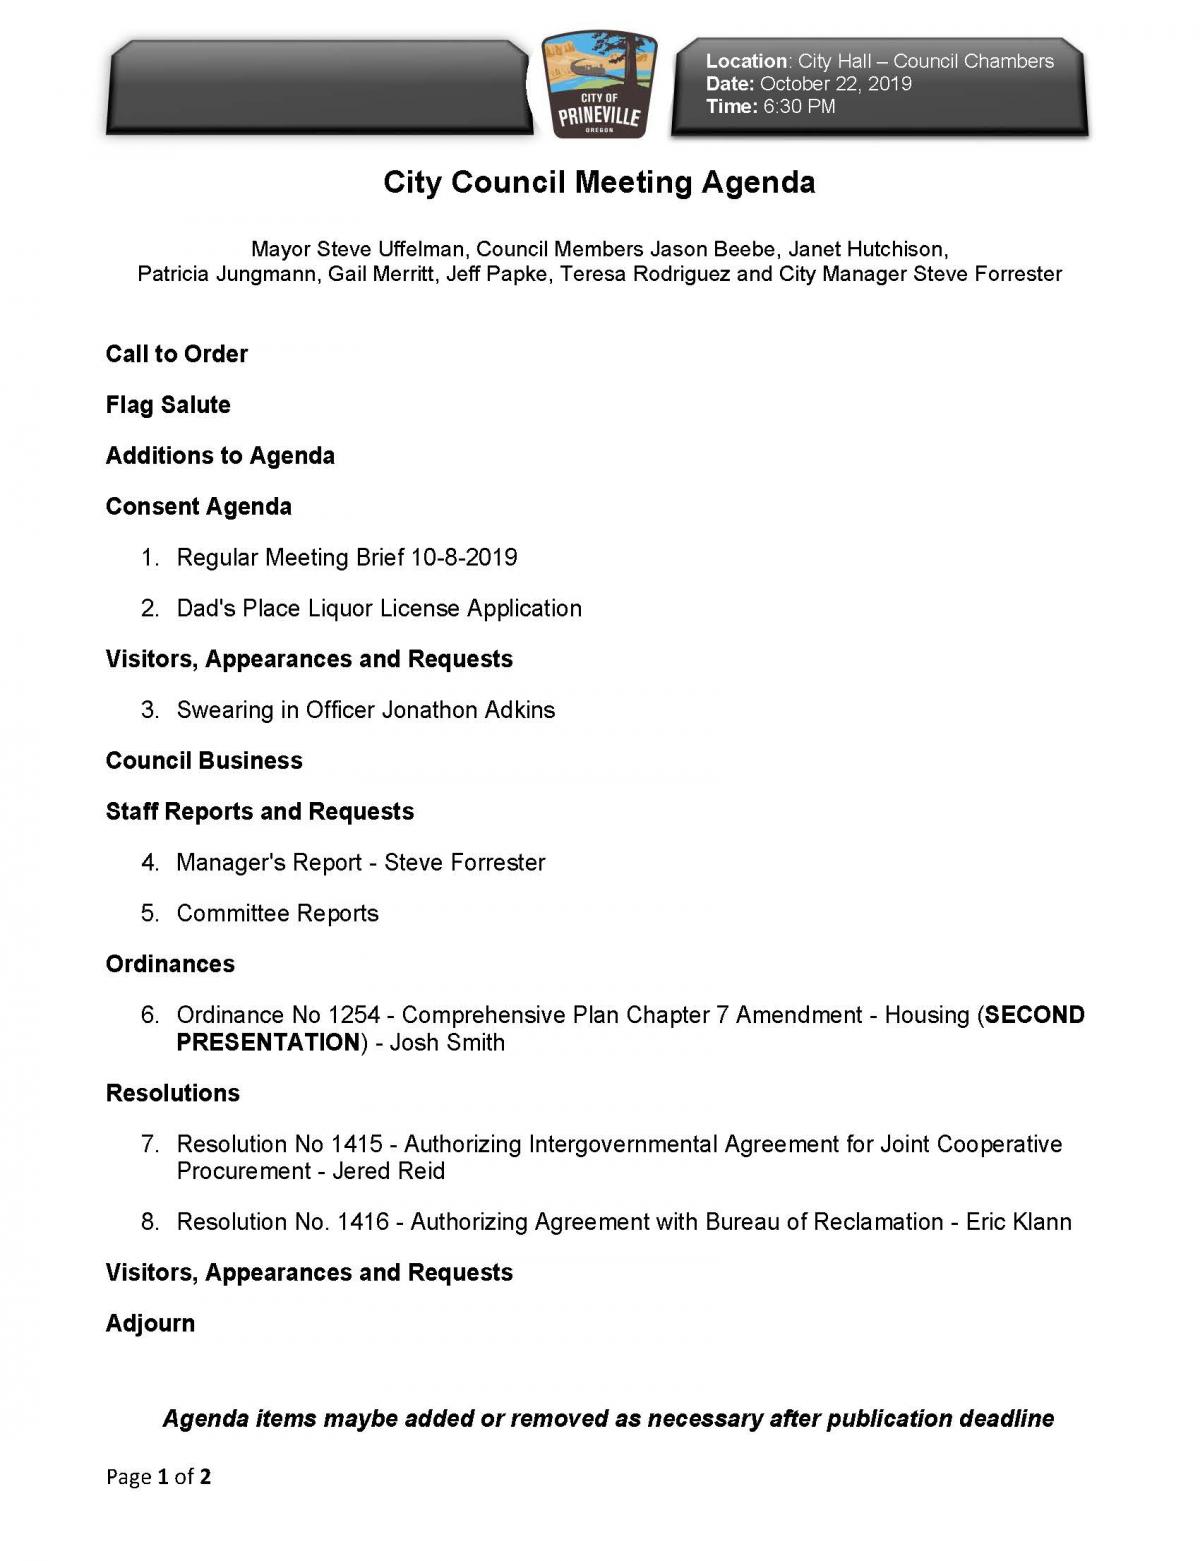 Council Agenda 10-22-19